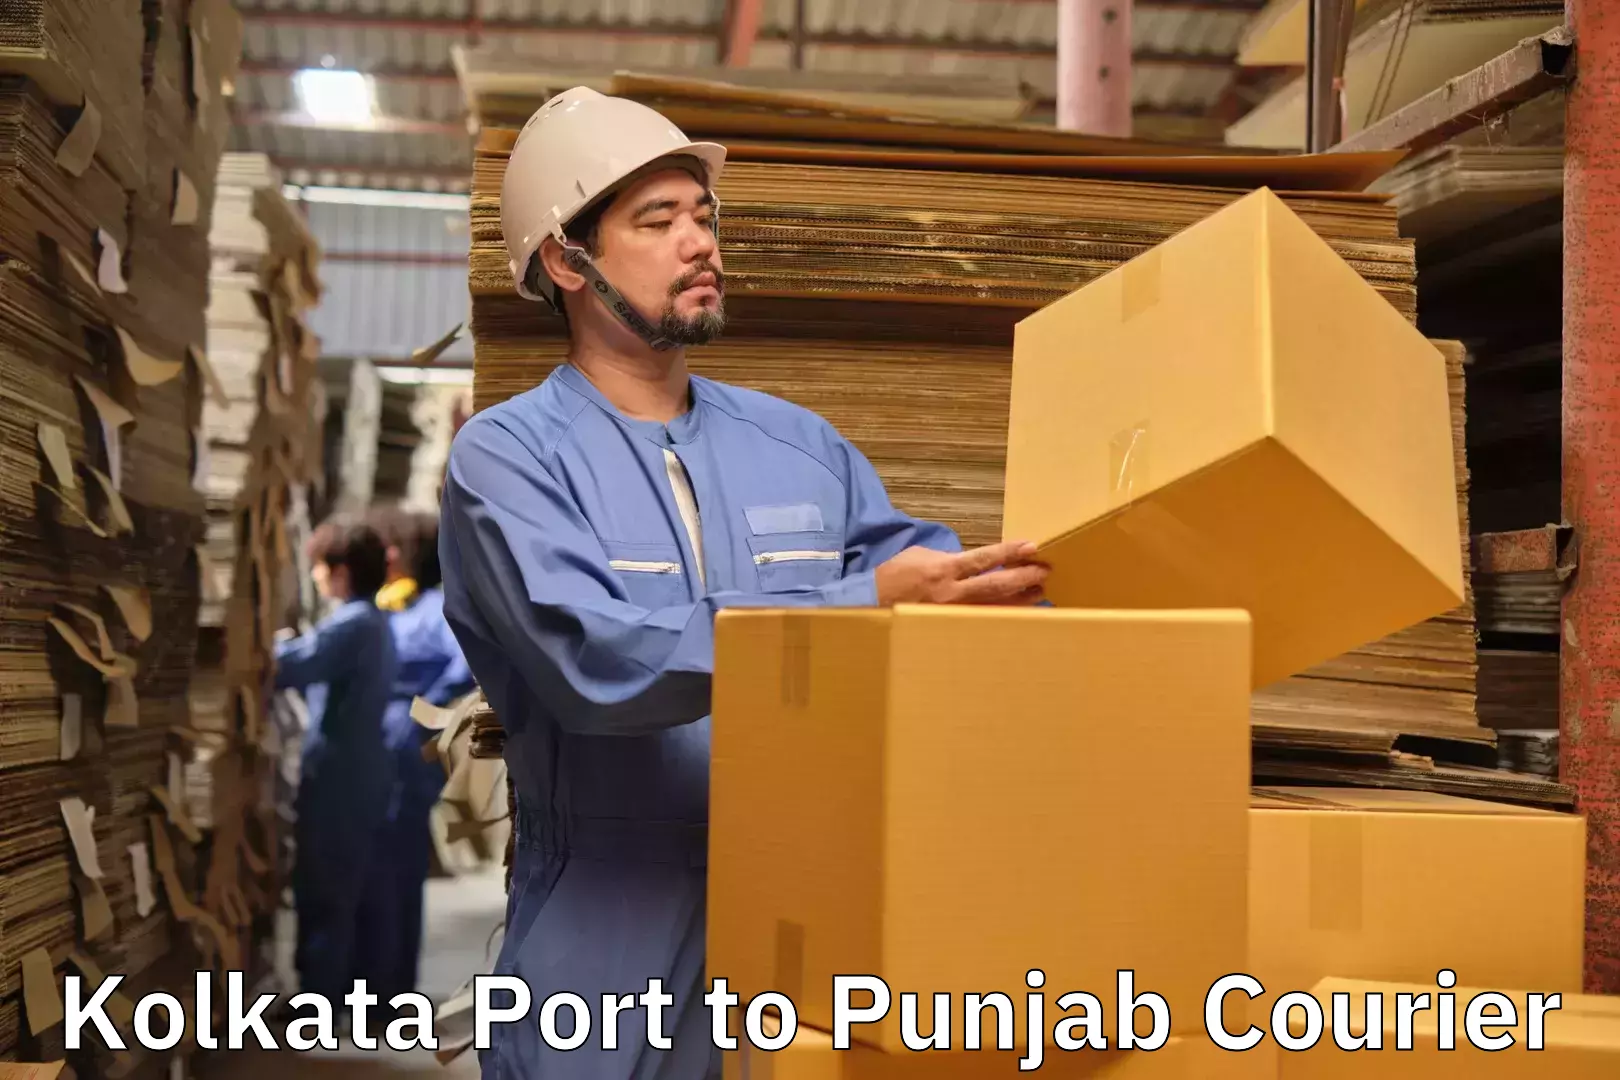 Baggage delivery solutions Kolkata Port to Amritsar